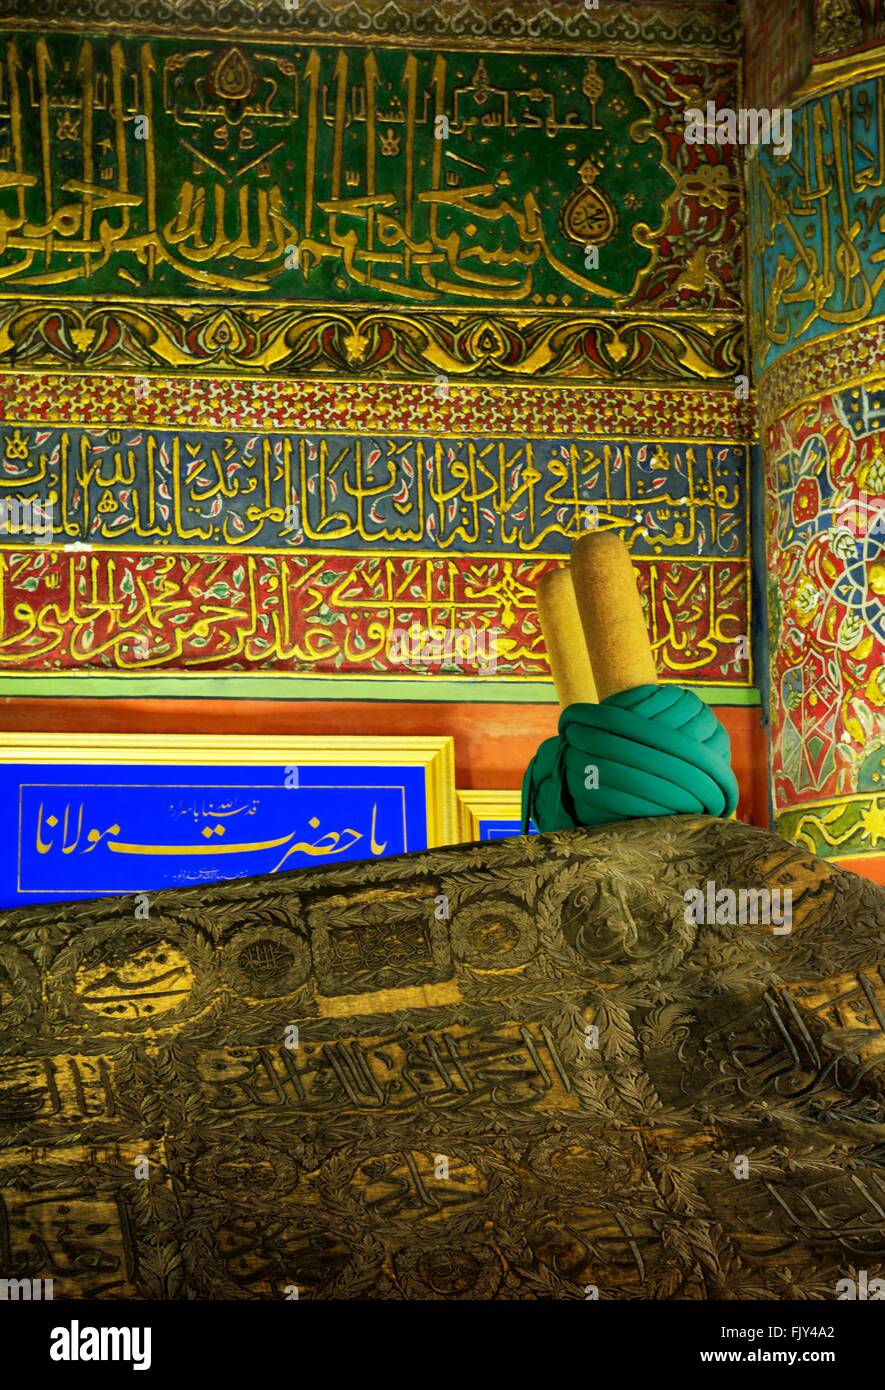 Mevlana Museum, Stadt Konya, Türkei. Brocade abgedeckt Sarkophag des Persischen sufi Mystiker Mevlana aka Dschalal ad-Din muhammad Rumi Stockfoto